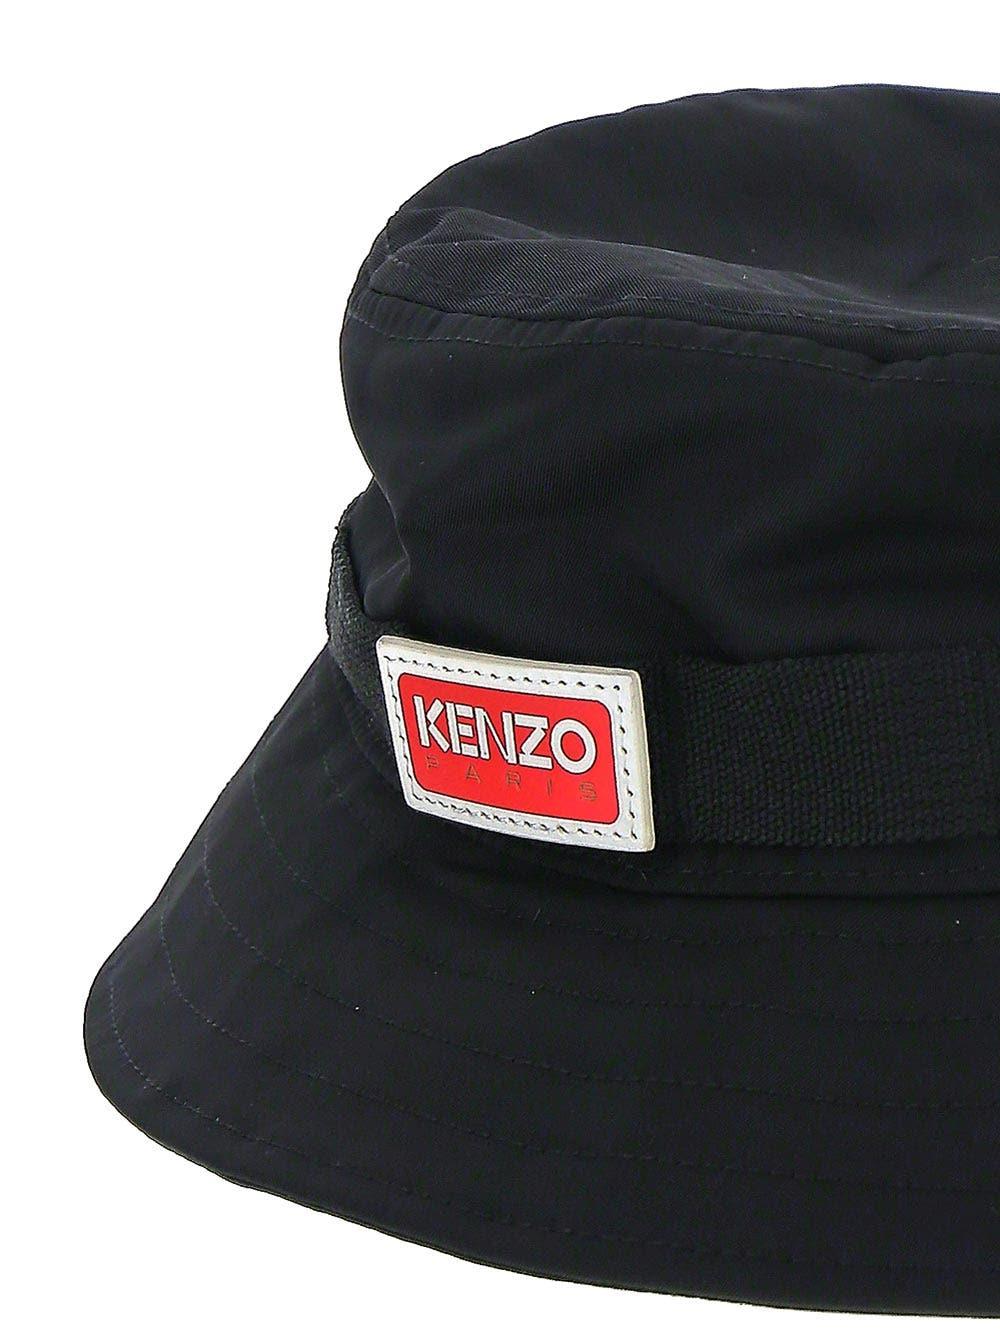 Shop Kenzo Black Bucket Hat